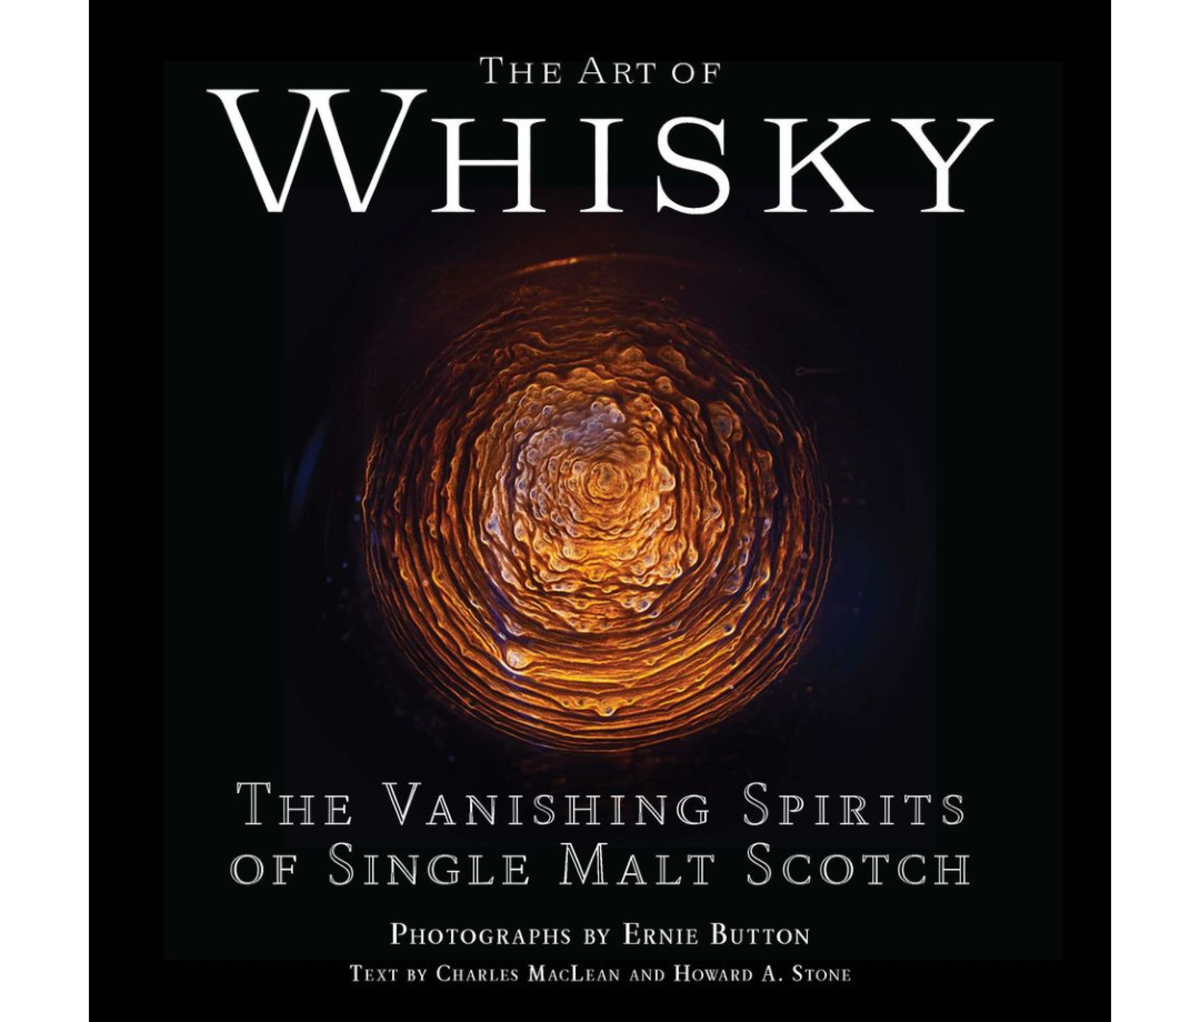 The Art of Whisky- The Vanishing Spirits of Single Malt Scotch by Ernie Button